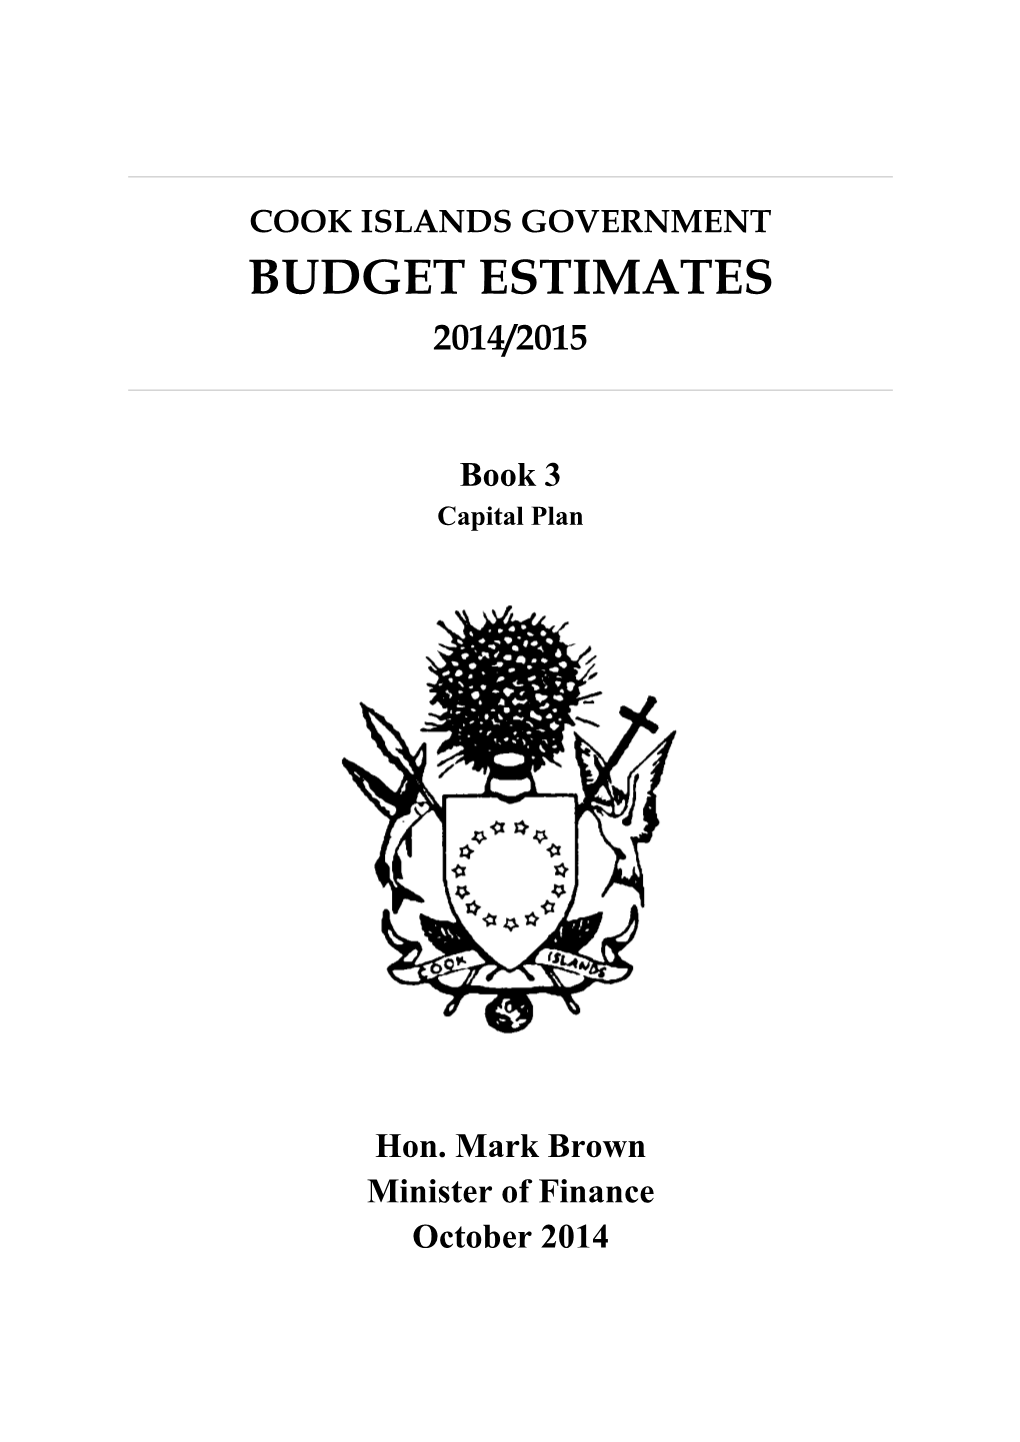 Cook Islands Government Budget Estimates 2014/2015